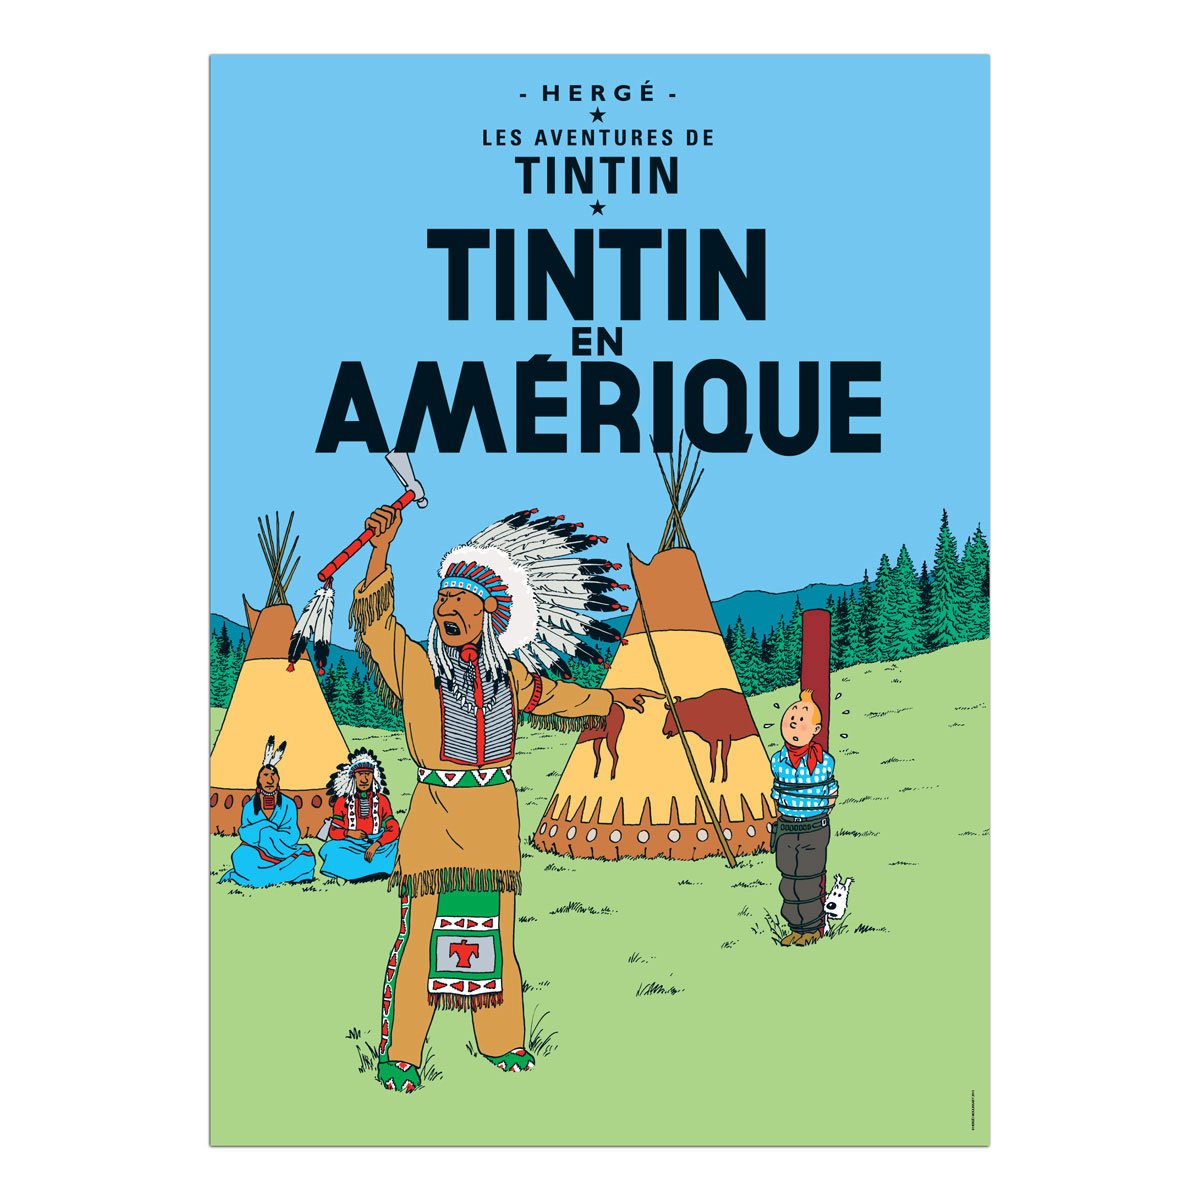 America Tintin poster